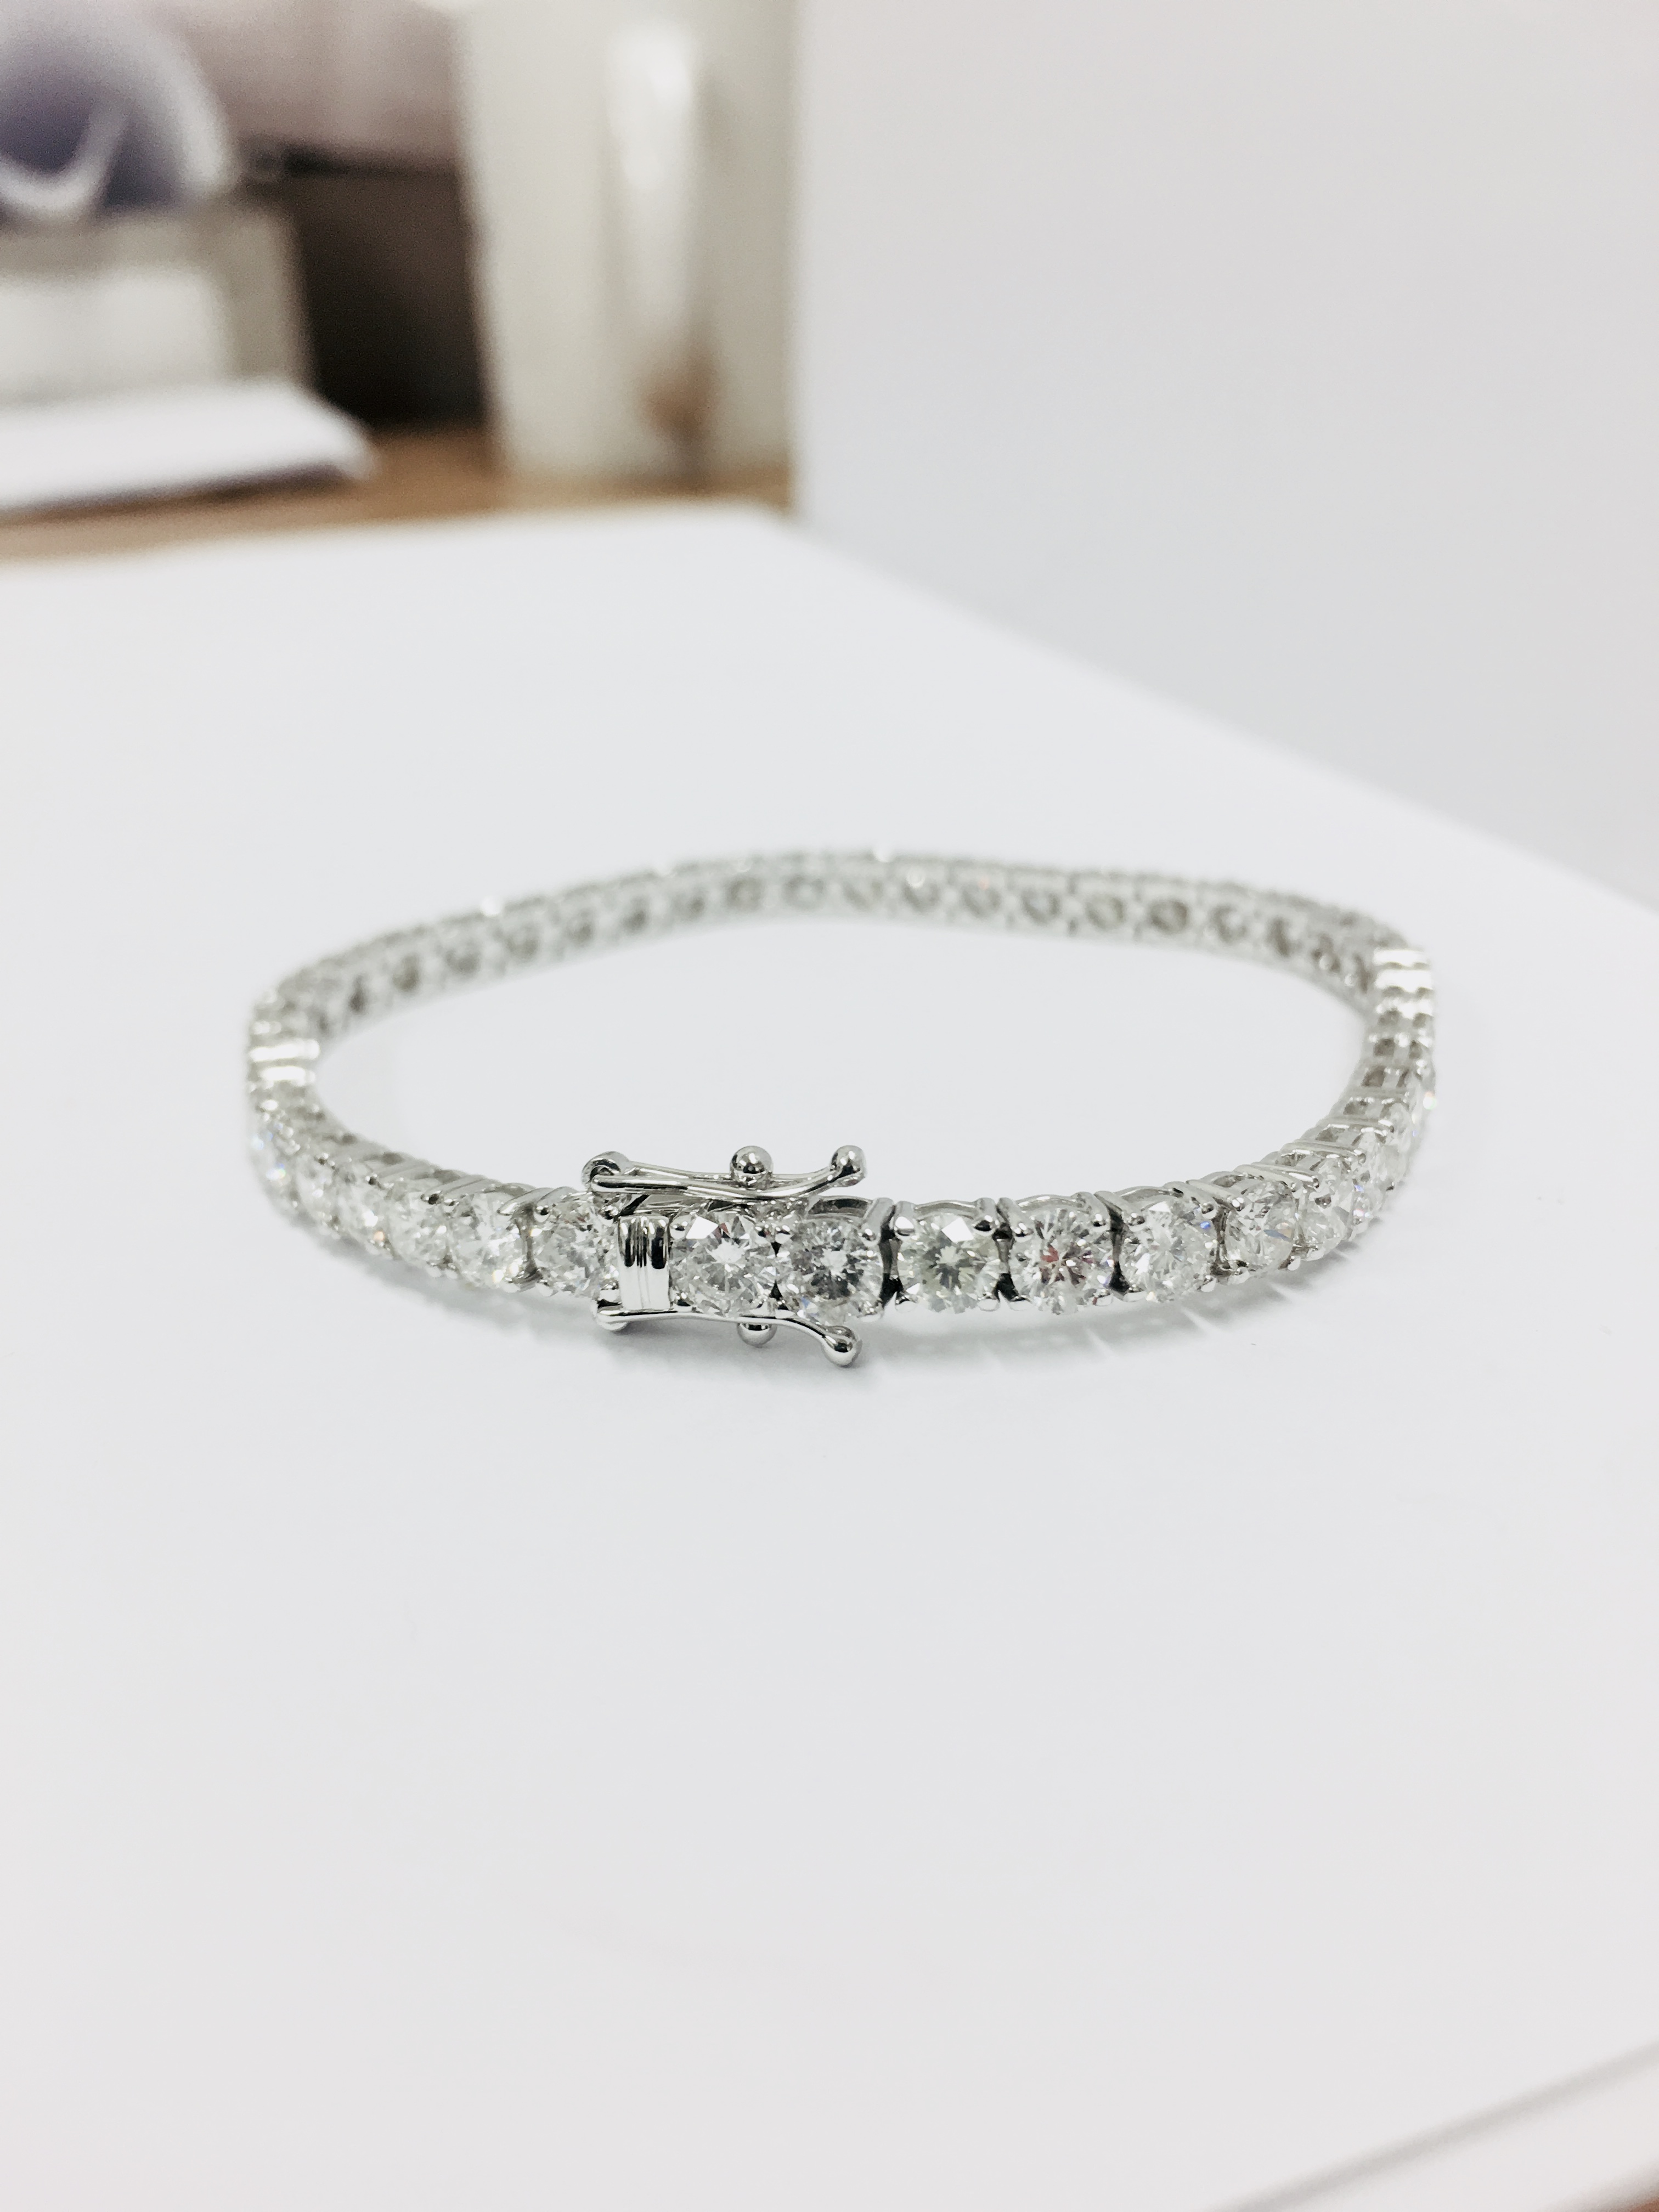 8.00ct Diamond tennis bracelet set with brilliant cut diamonds of G colour - Image 16 of 42